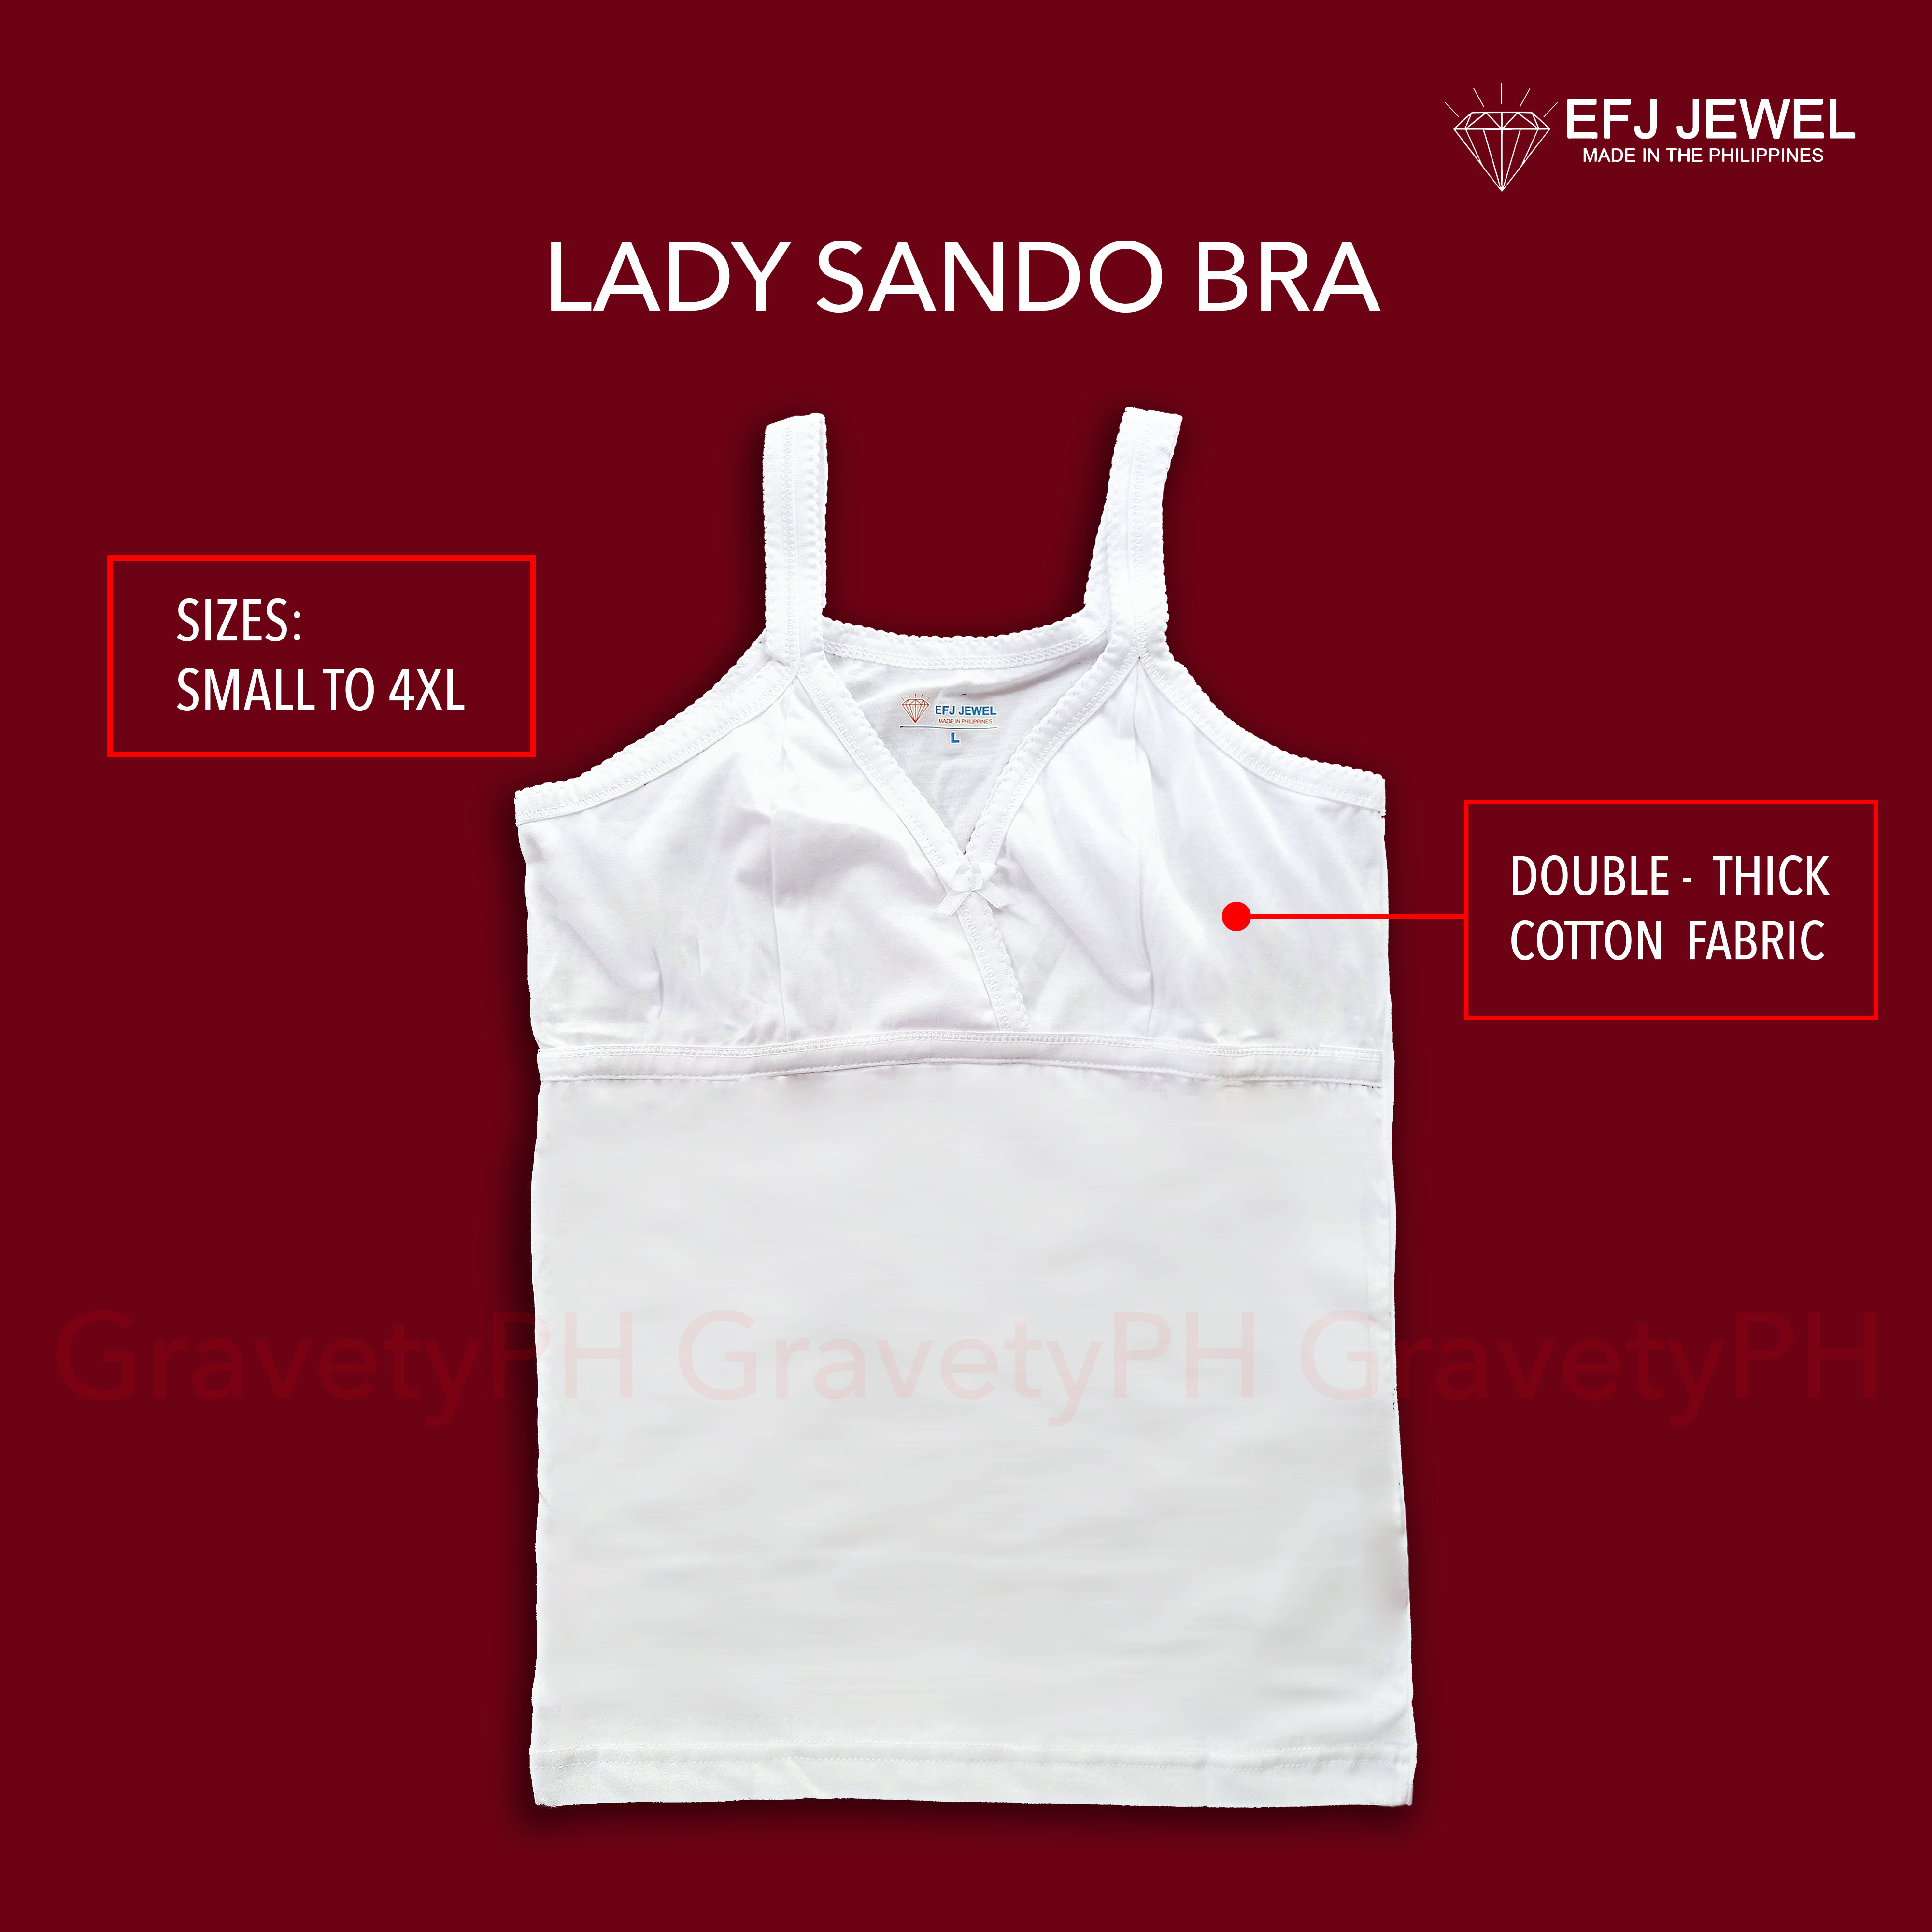 Lady Sando Bra for Girls - EFJ JEWEL Brand